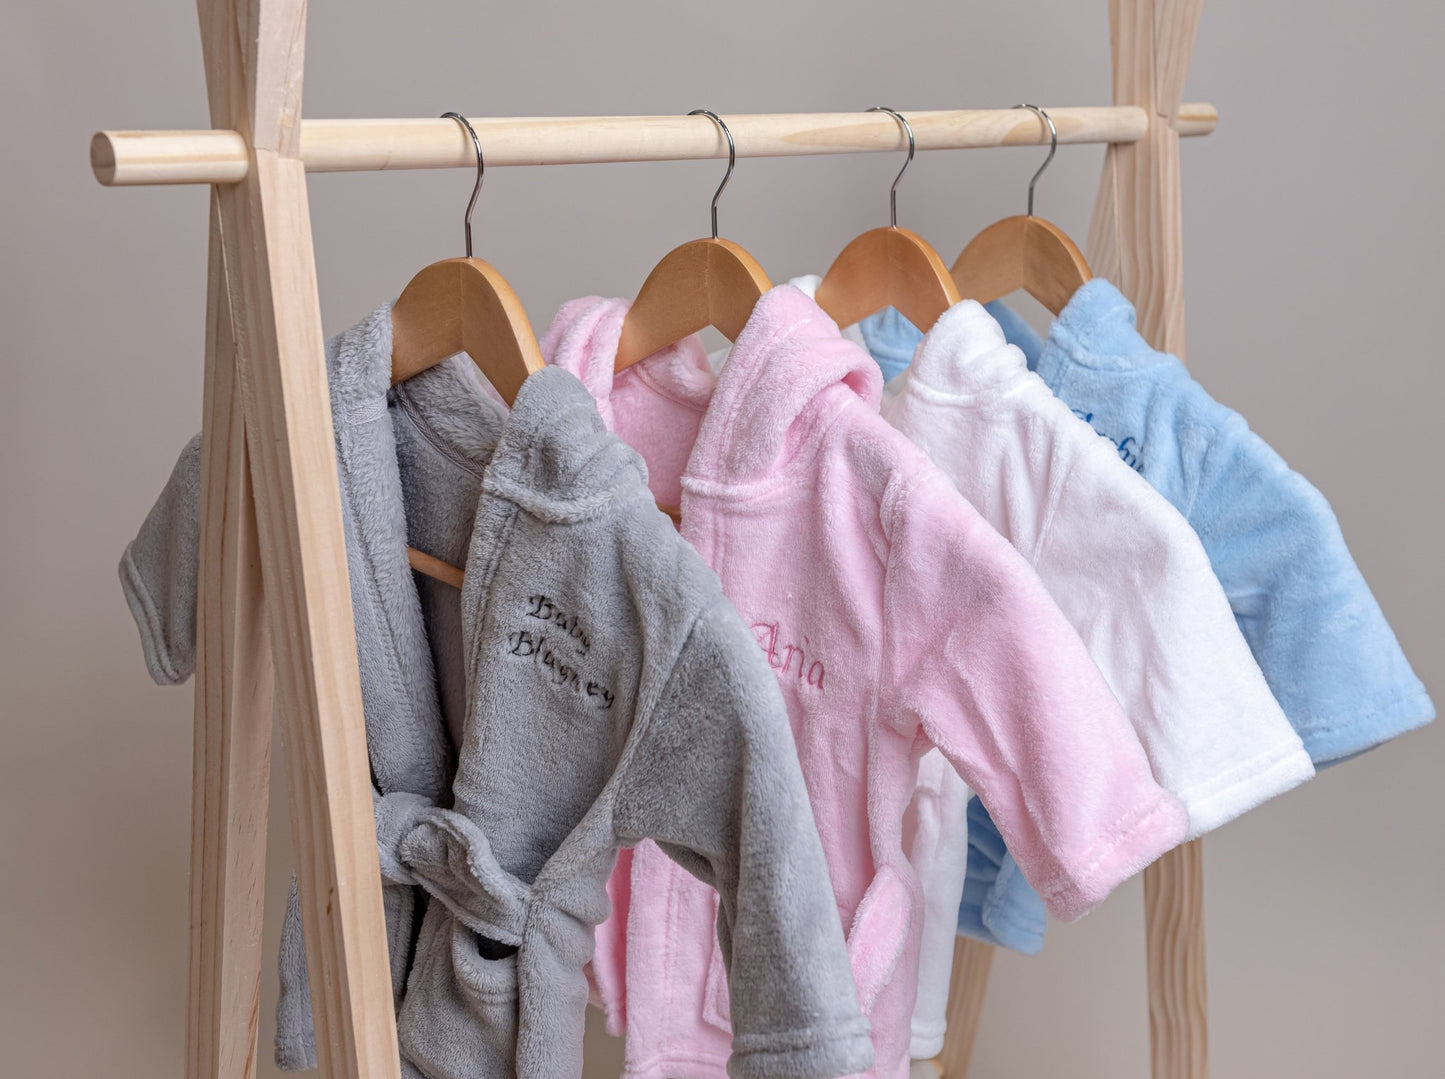 Custom bath robes for baby showers, newborns, or 1st birthdays